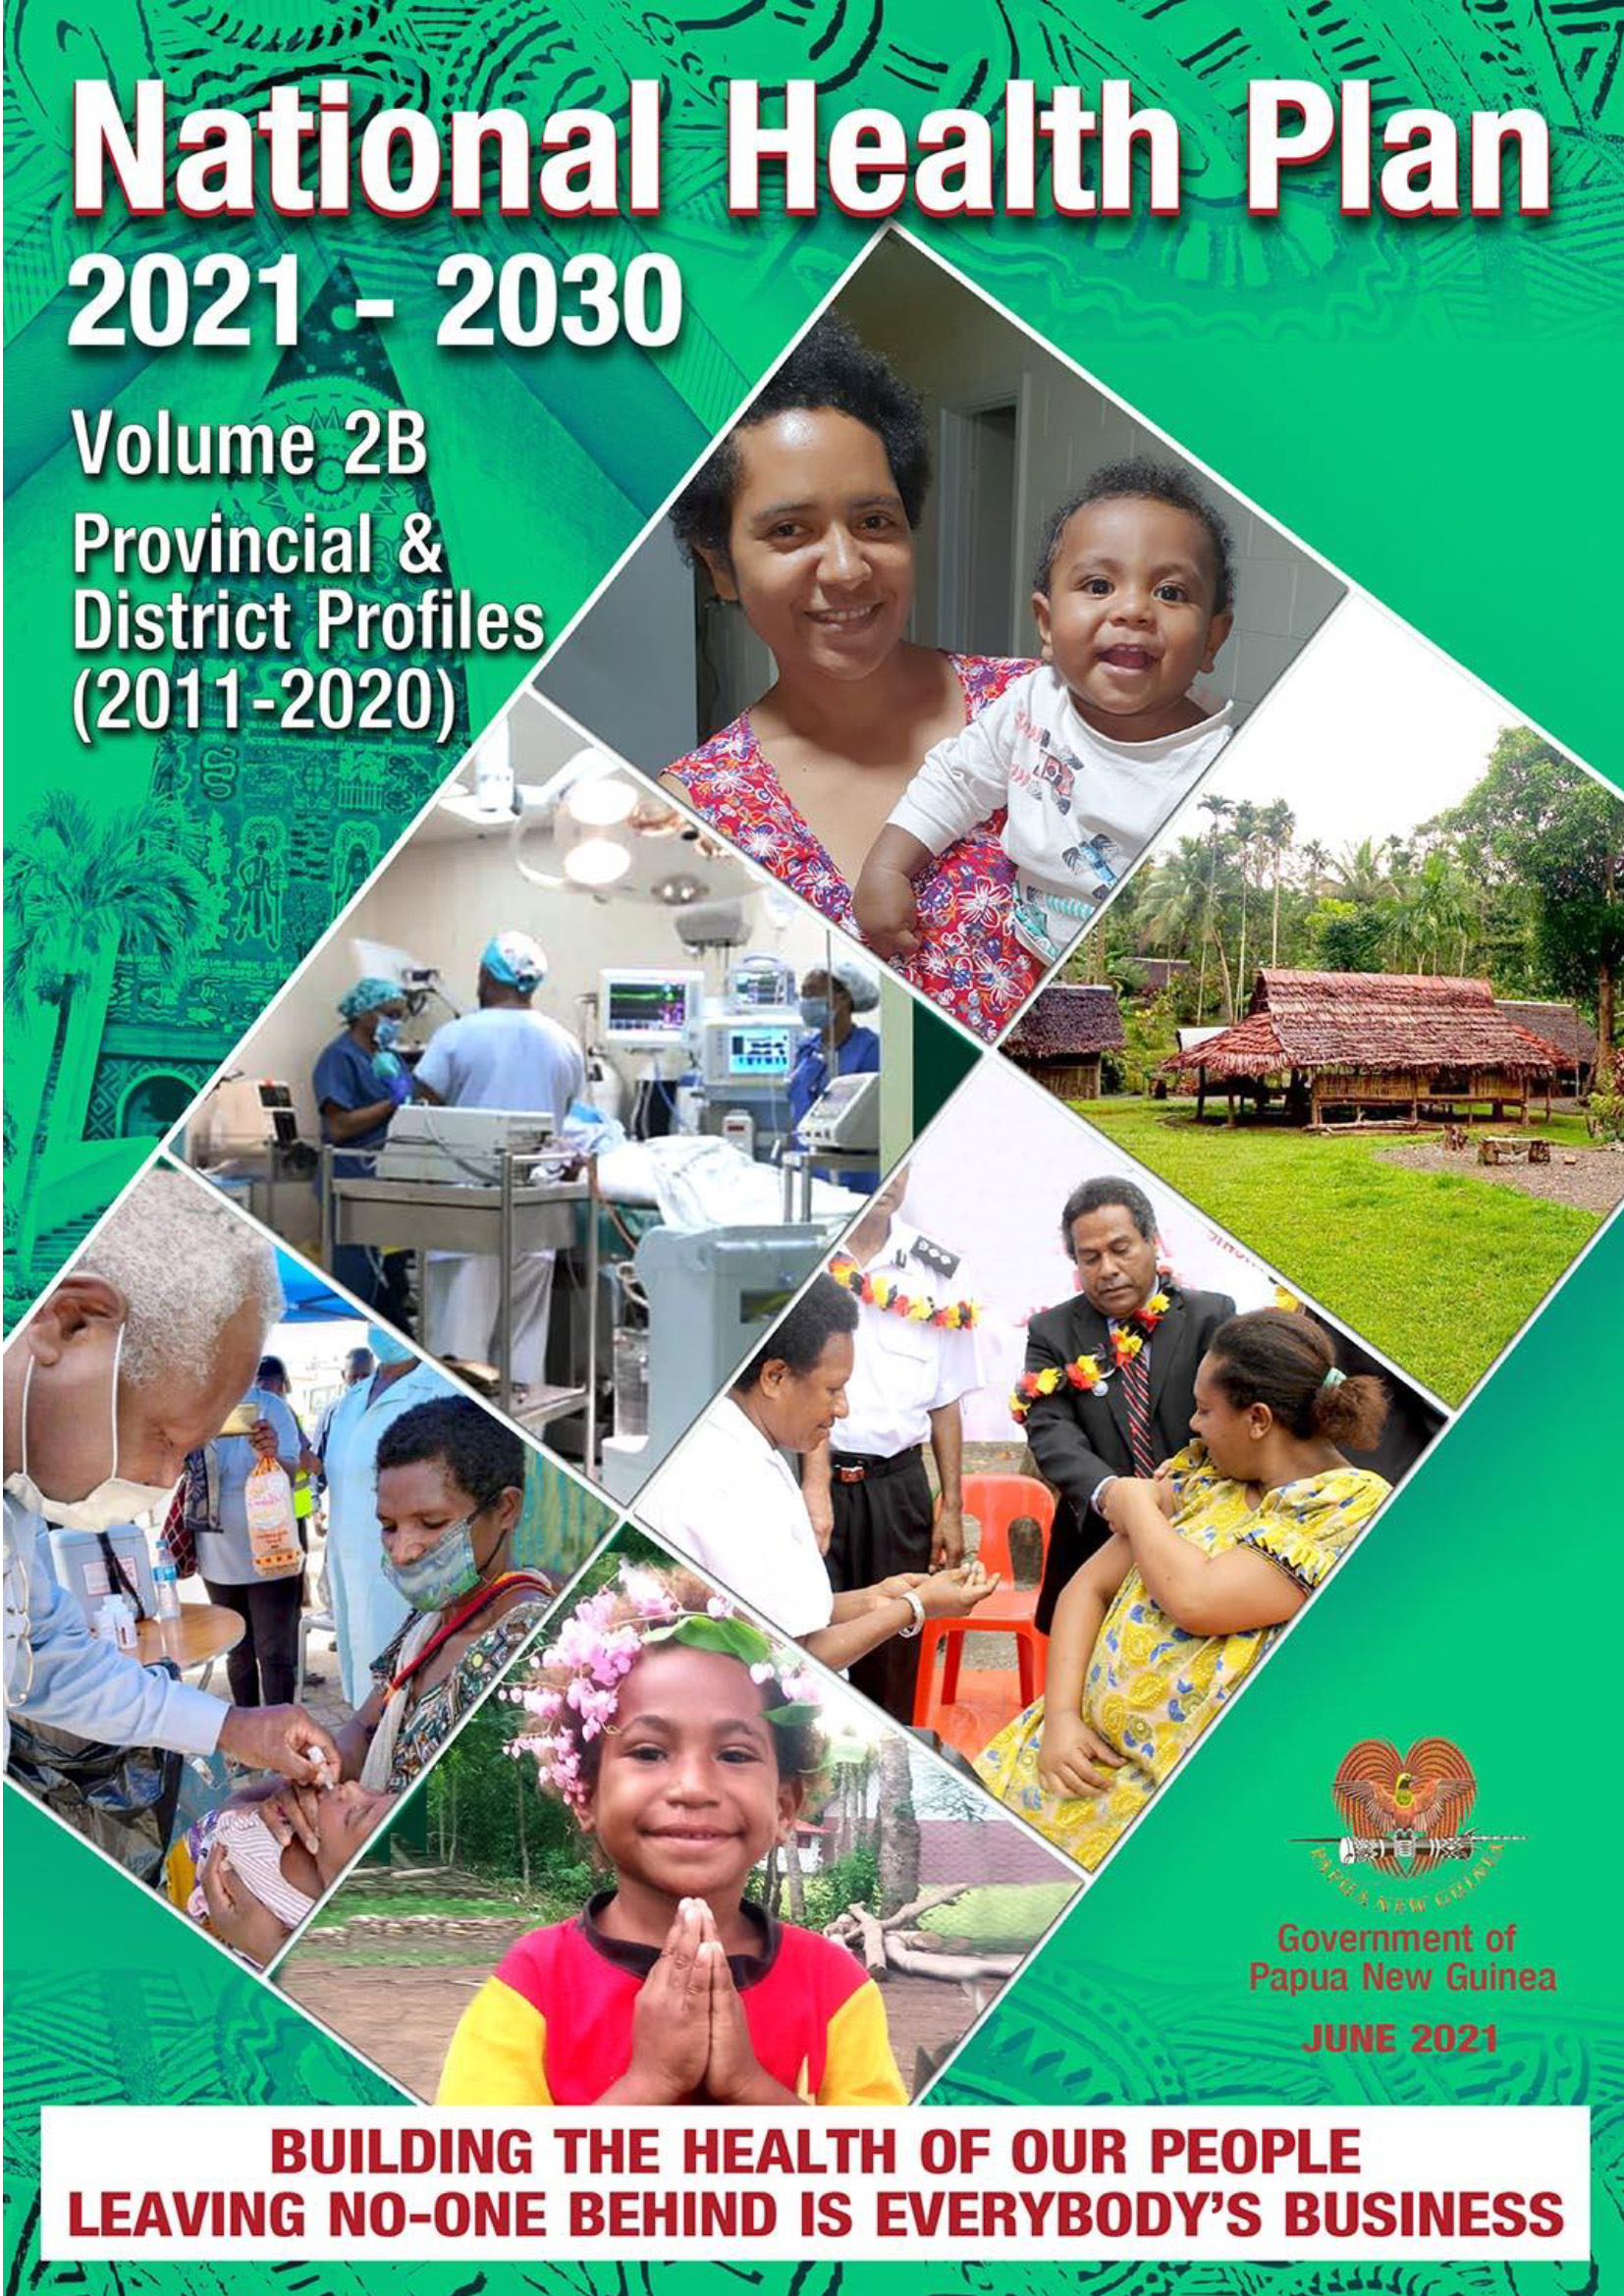 Plano nacional de saúde 2021-2030, volume 2B 